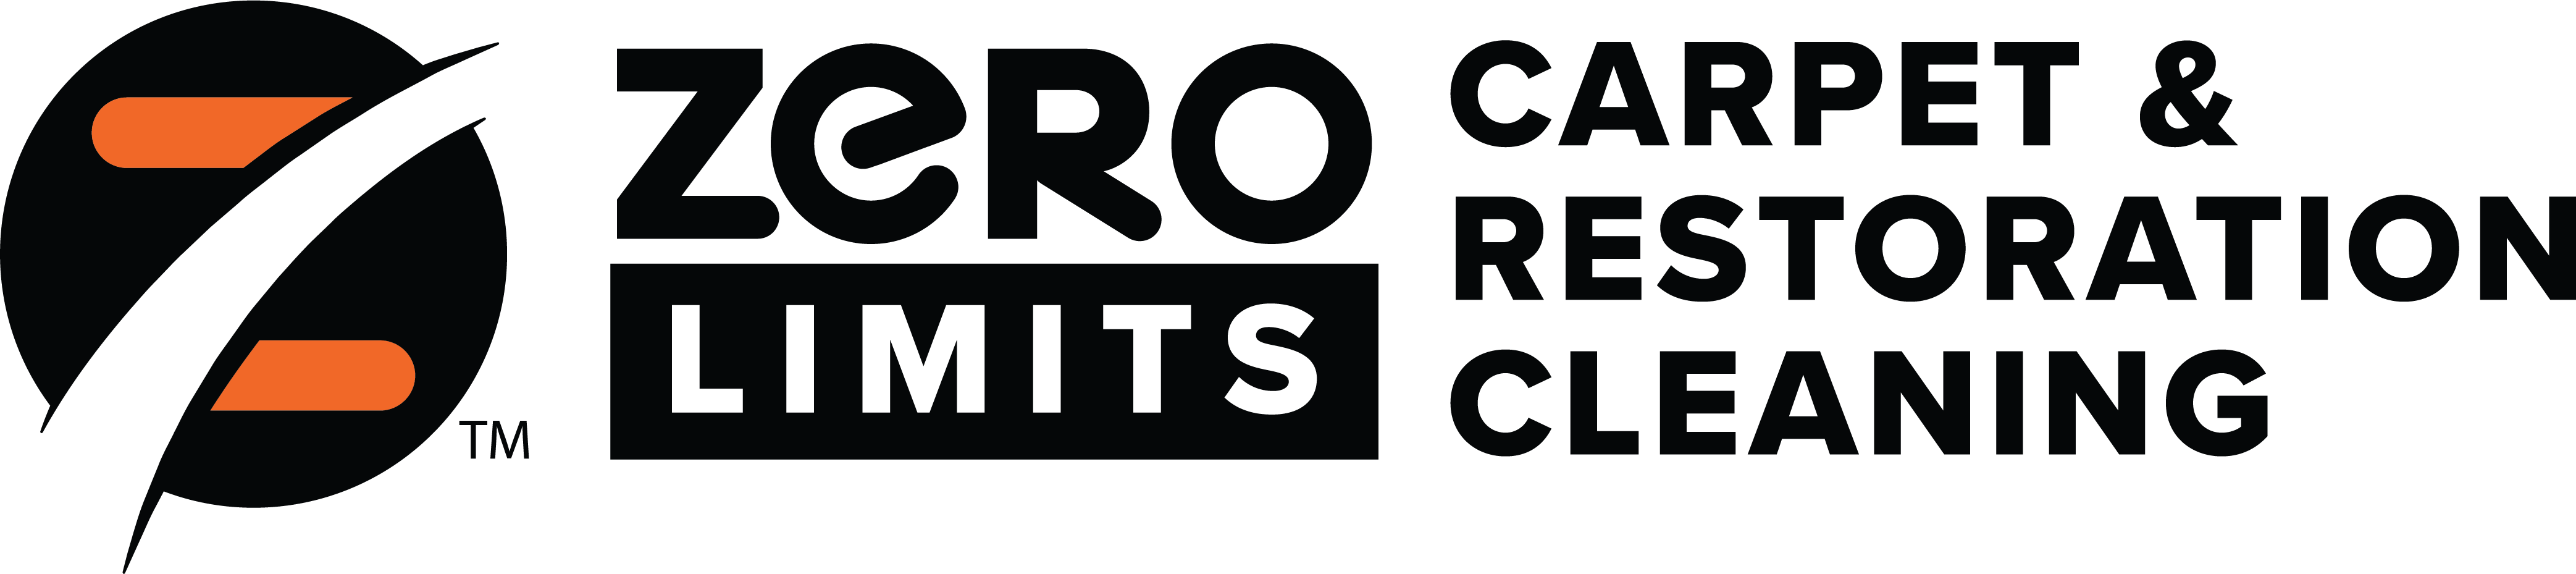 Zero Limits Carpet Cleaning Services Logo